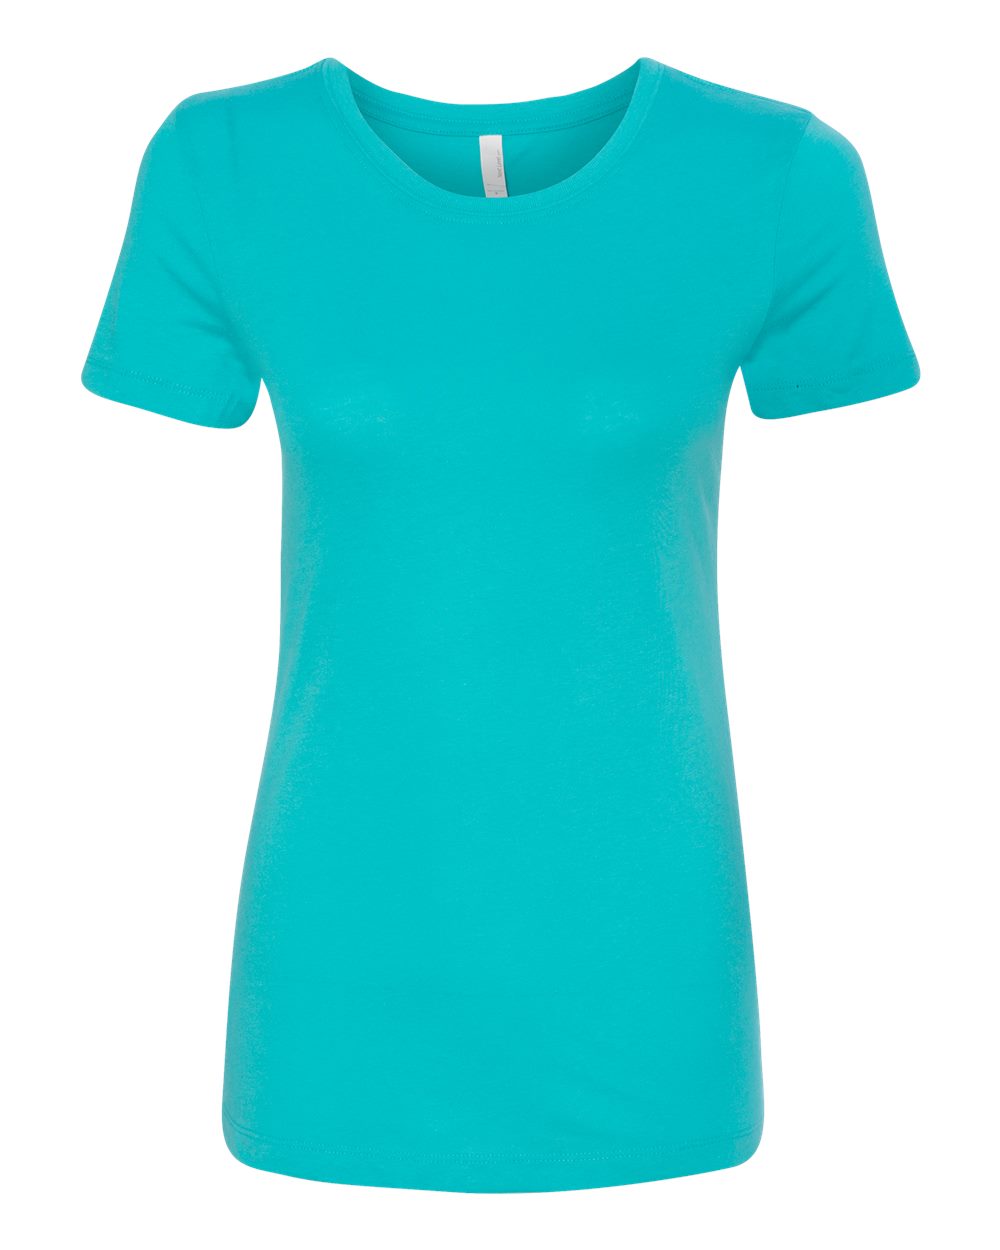 Next Level - Women's Ideal T-Shirt - 1510 Tahiti Blue